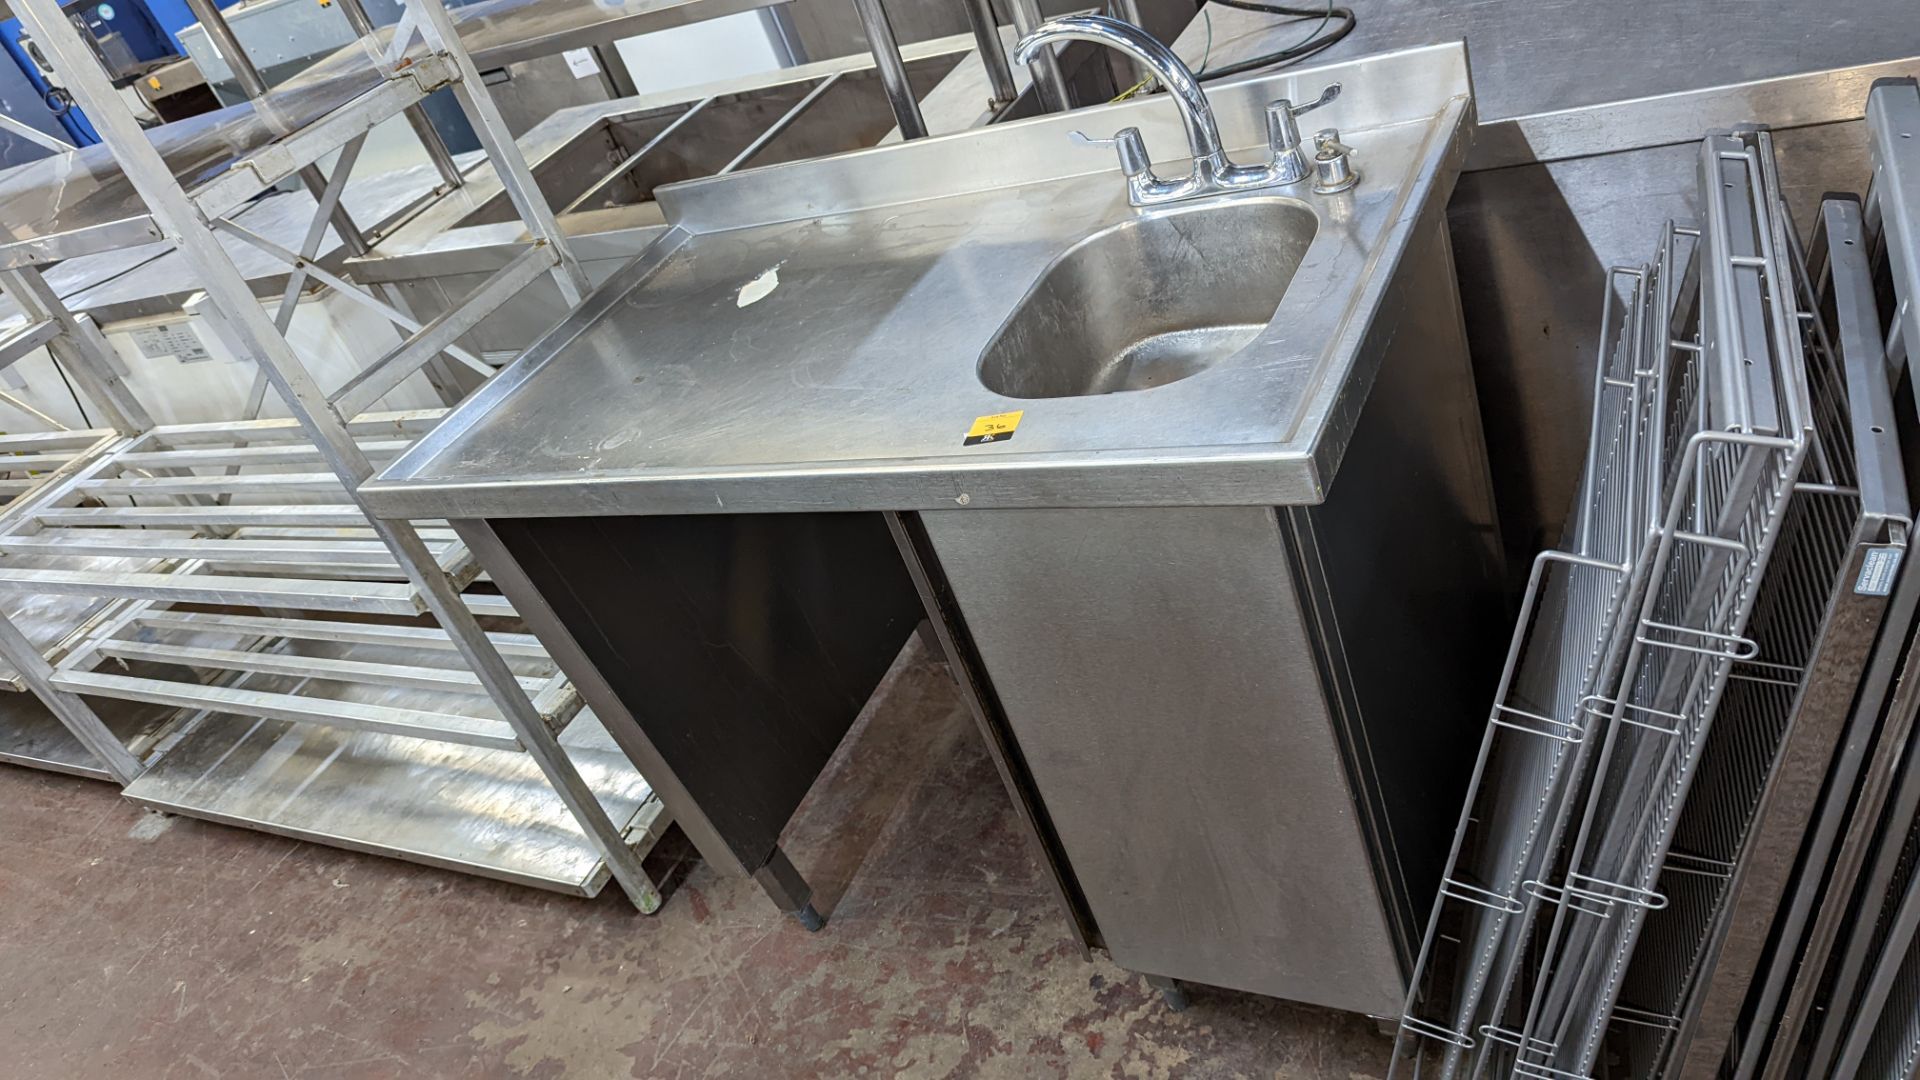 Stainless steel freestanding sink & drainer arrangement including storage below